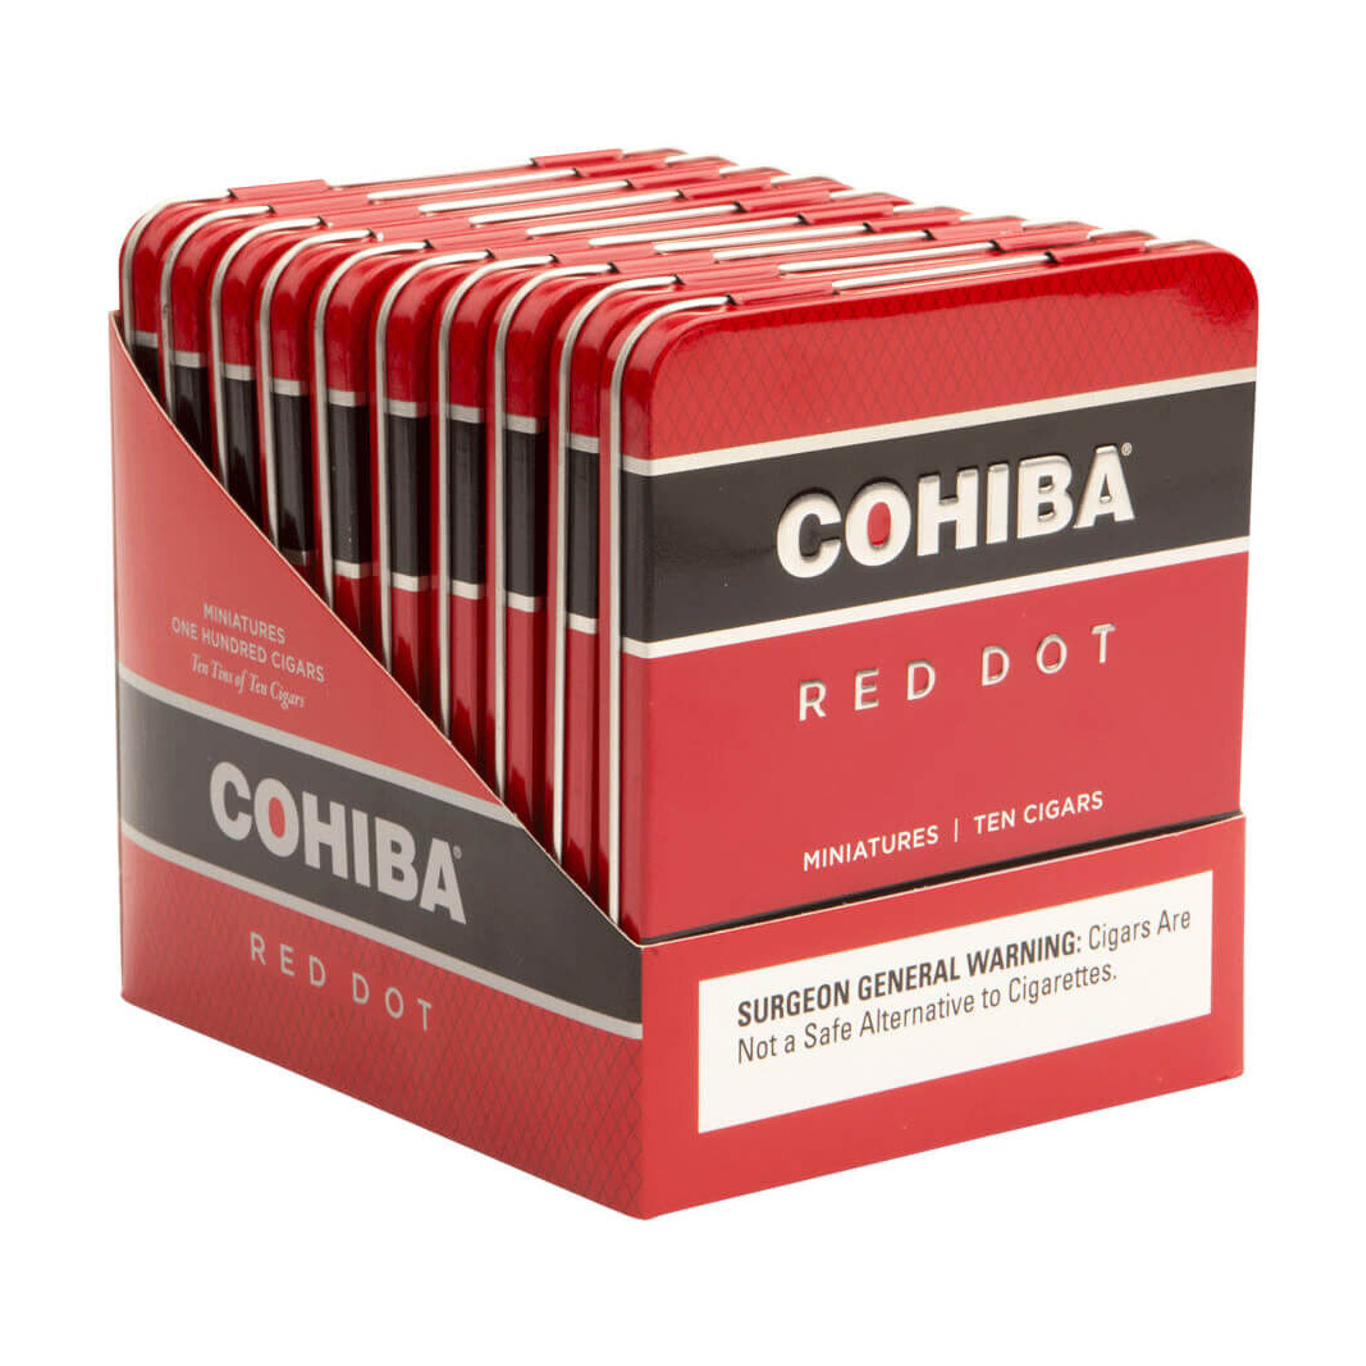 Cohiba Red Dot Miniatures - smooth and good smoke 